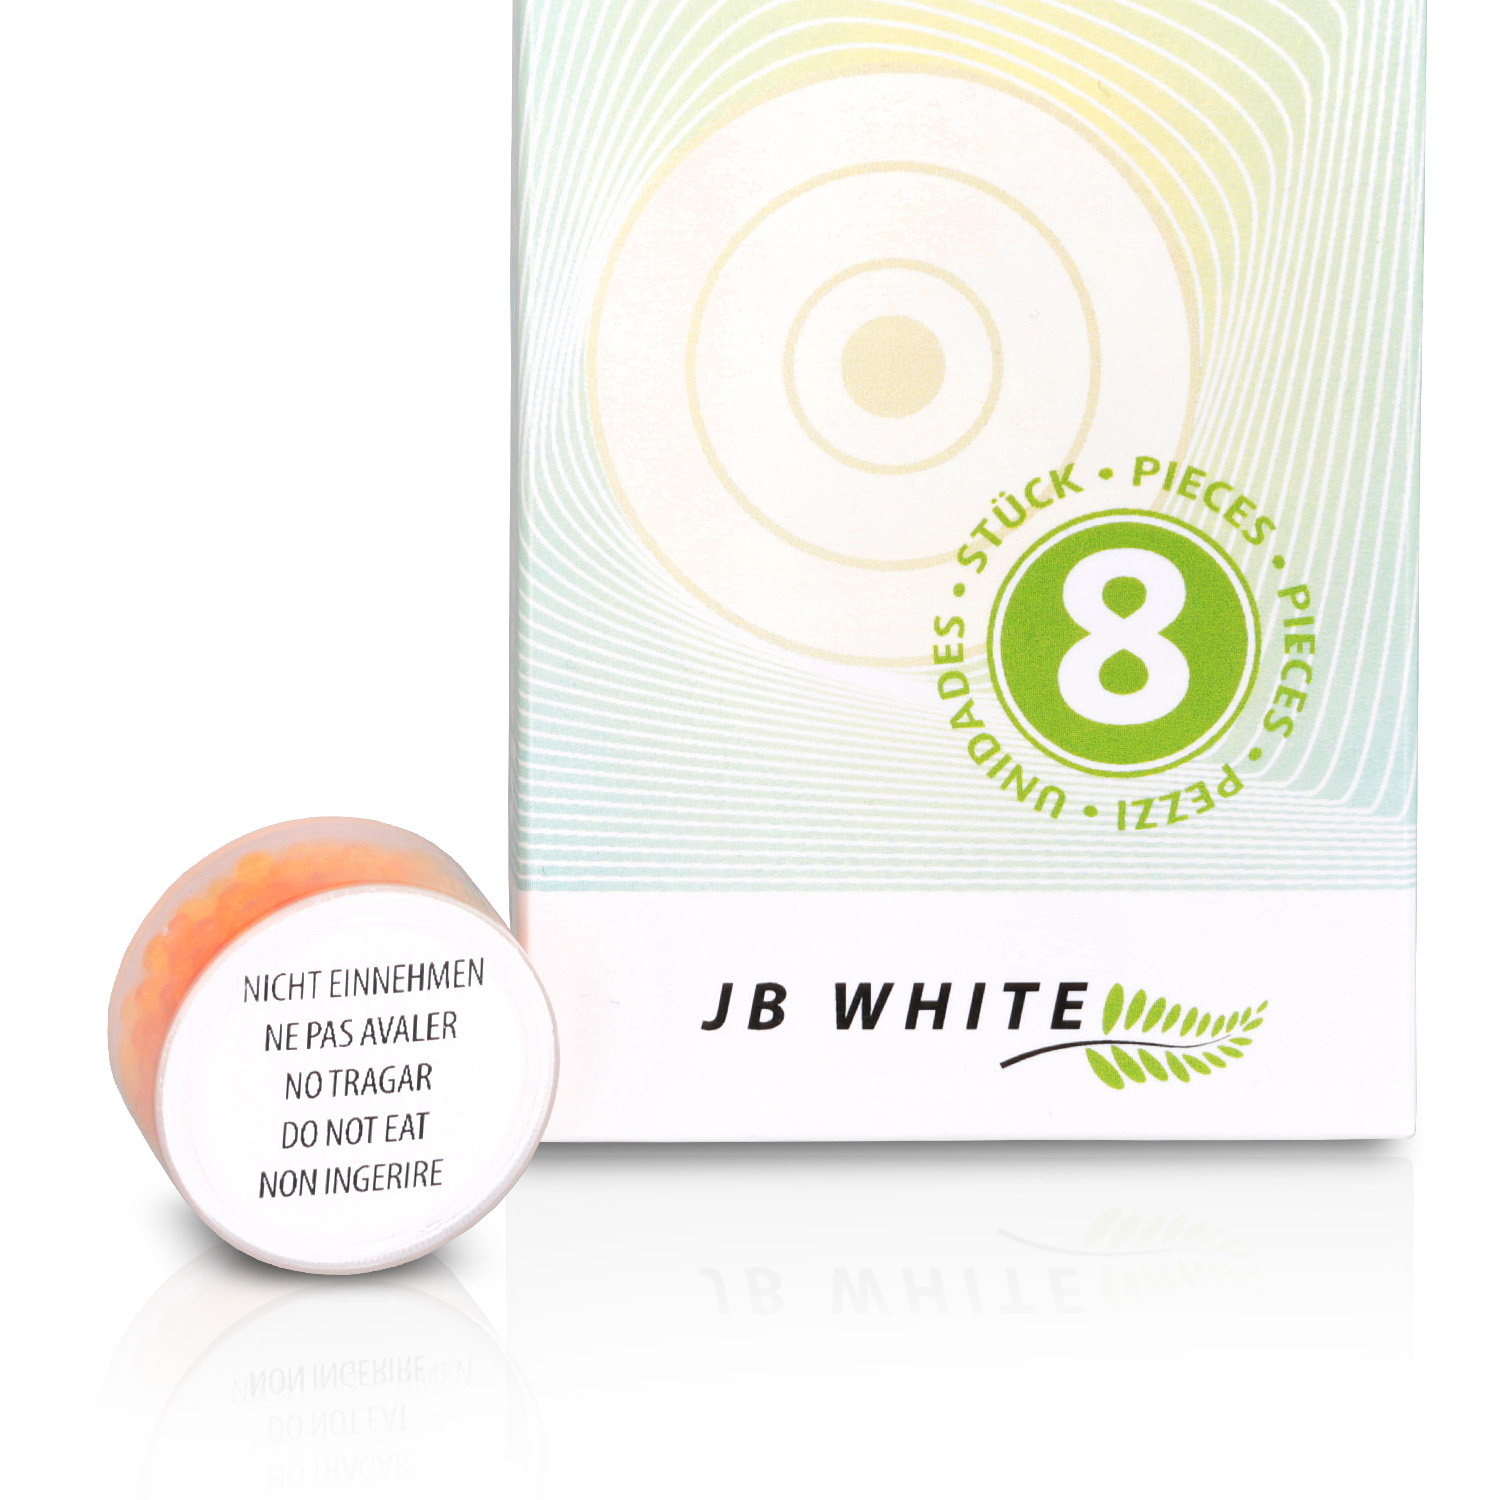 JB WHITE 16 mit Trocknungskapseln Trockentabletten Farbindikator Hörgerät Trockenkapseln Hörgeräte, für